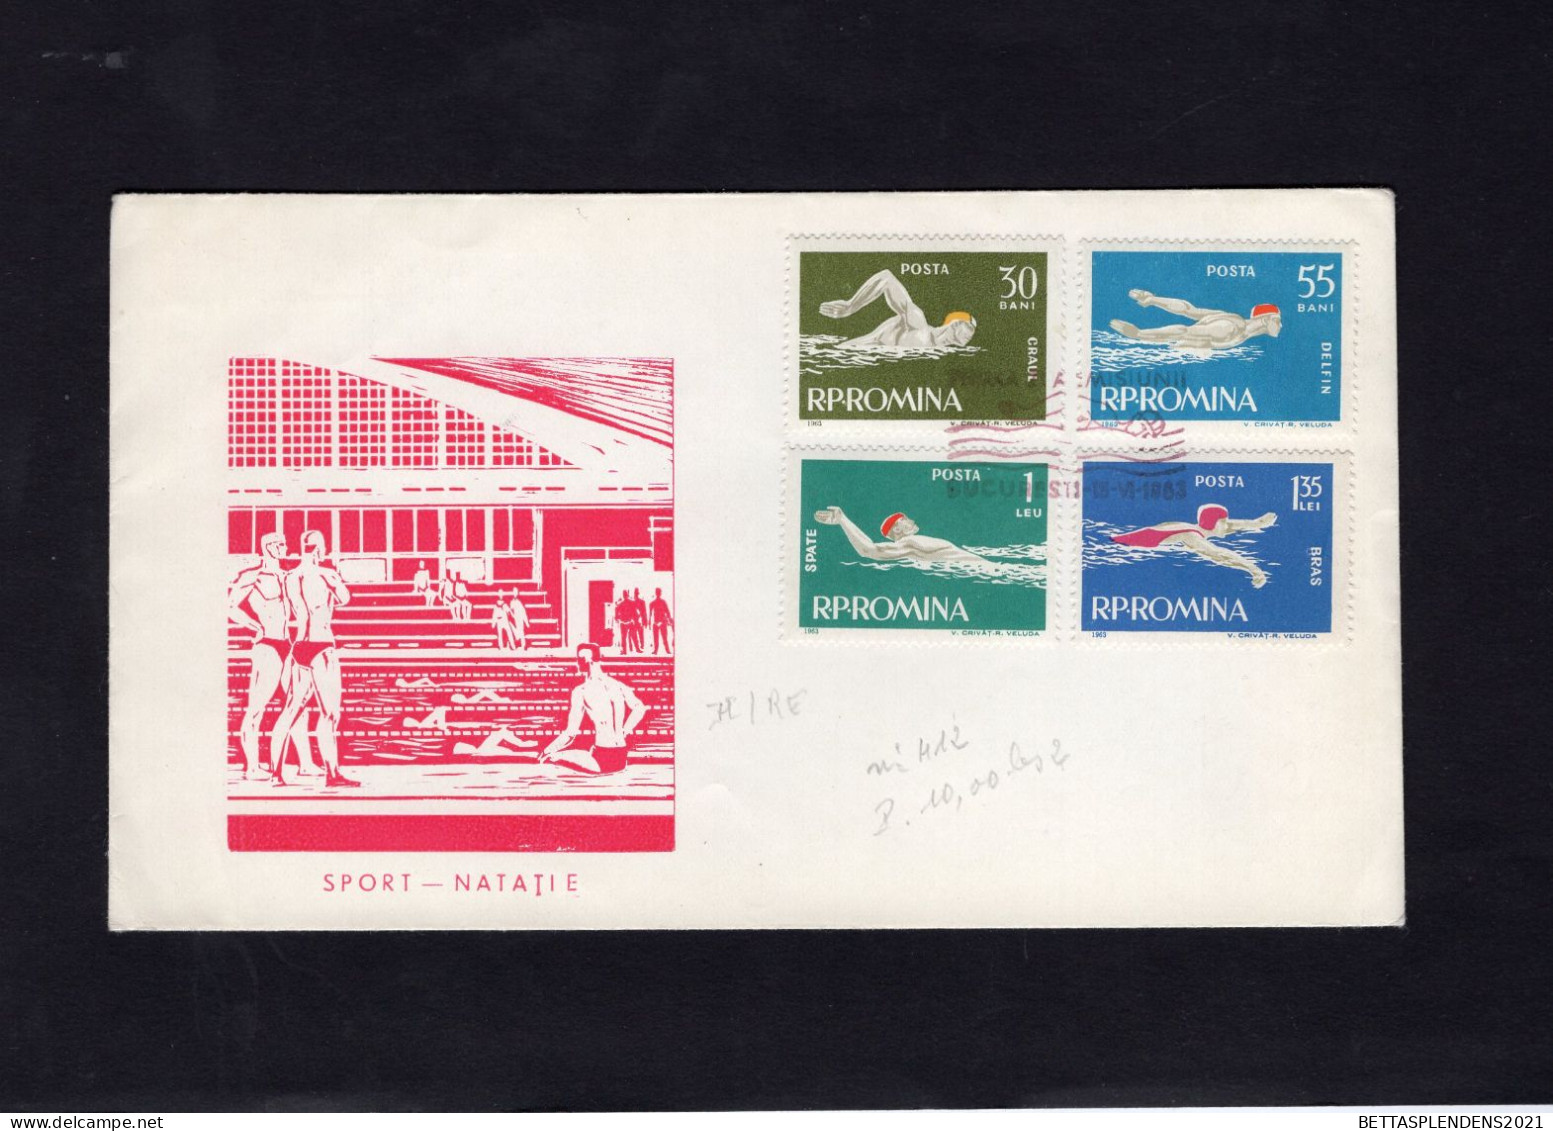 NATATION - LSC 1963 - SPORT NATATIE - BUCURESTI - YT 1917 & YT 1918 & YT 1919 & YT 1920 - Postmark Collection